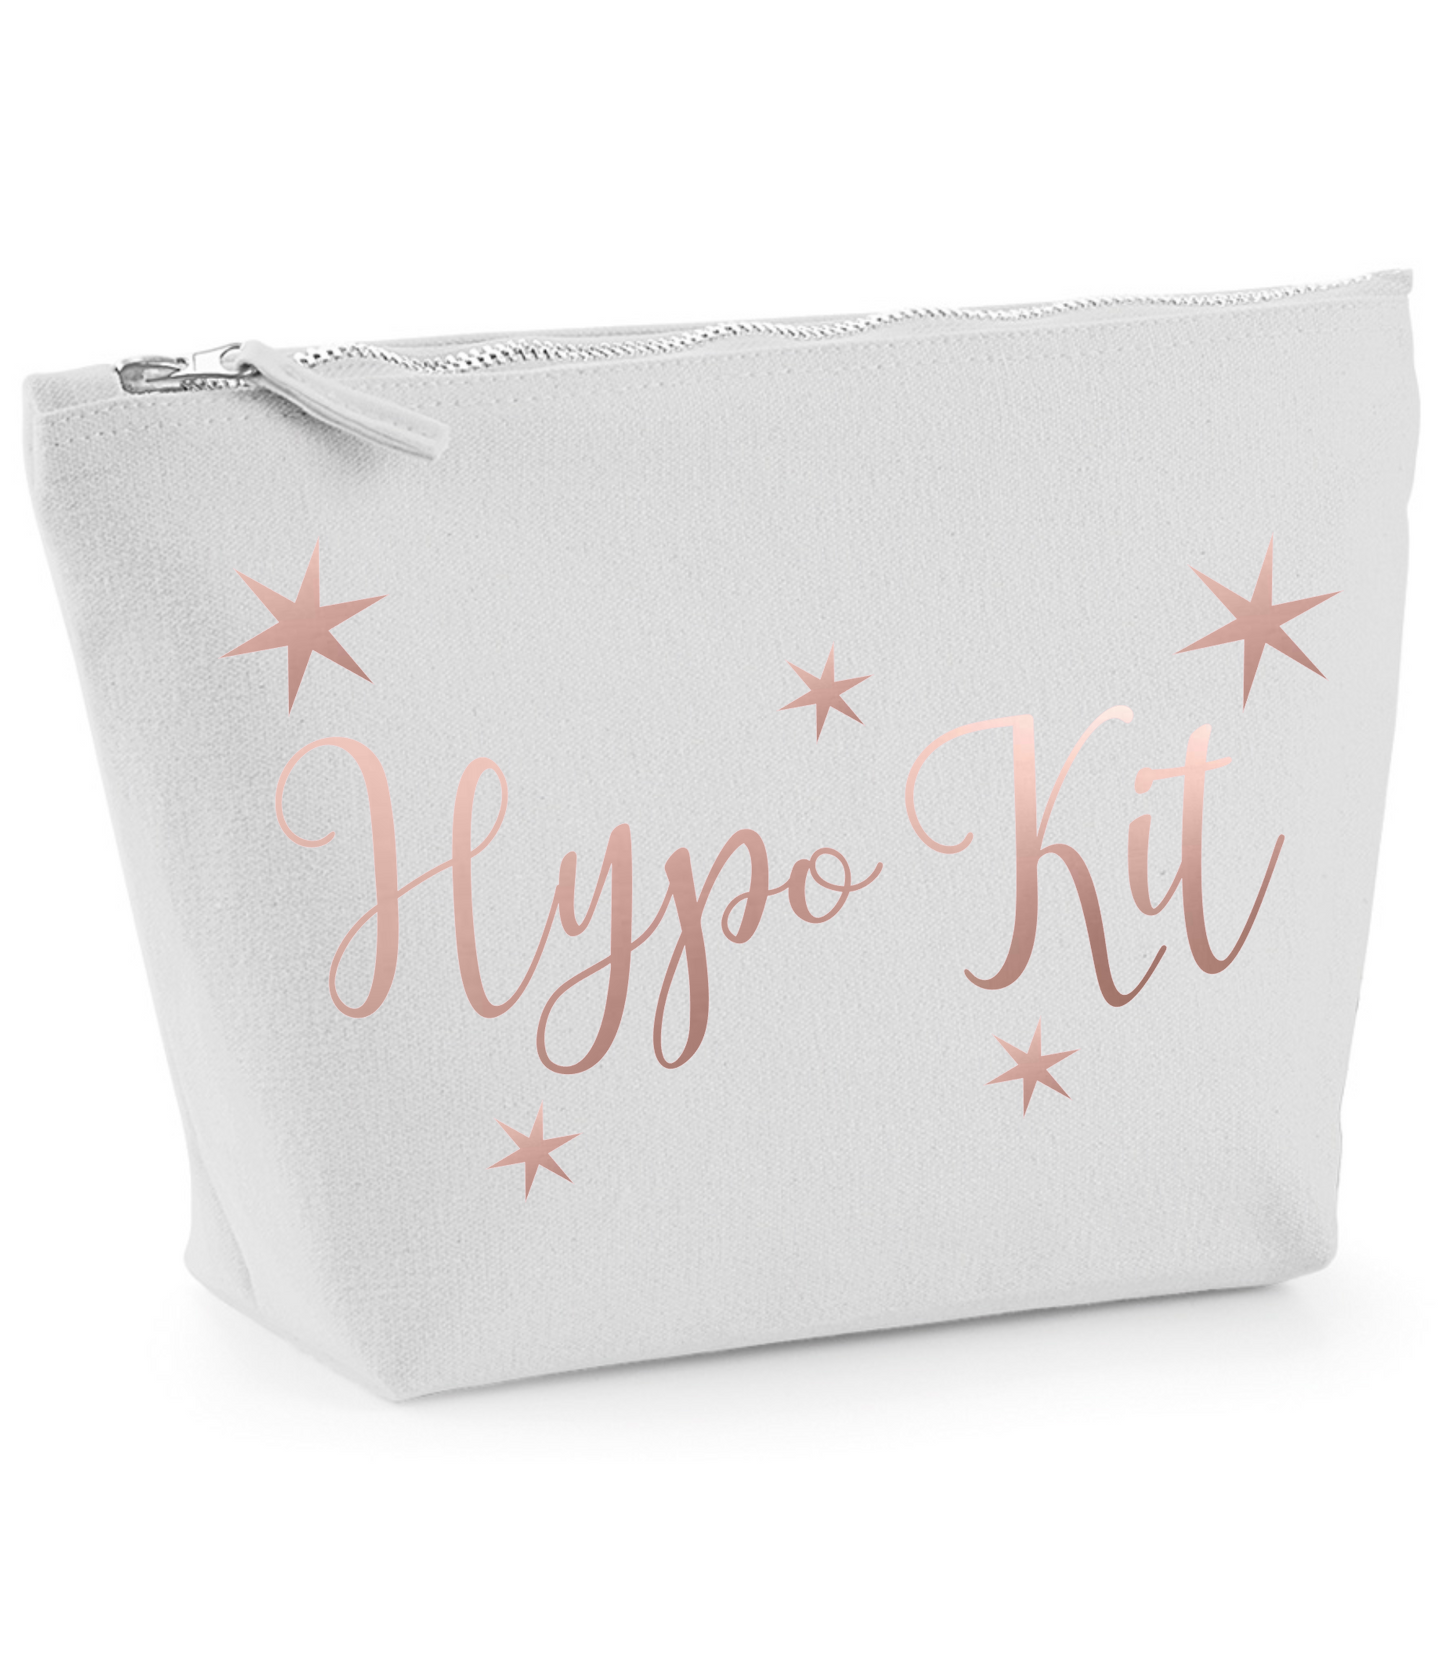 Hypo Kit Canvas Bag